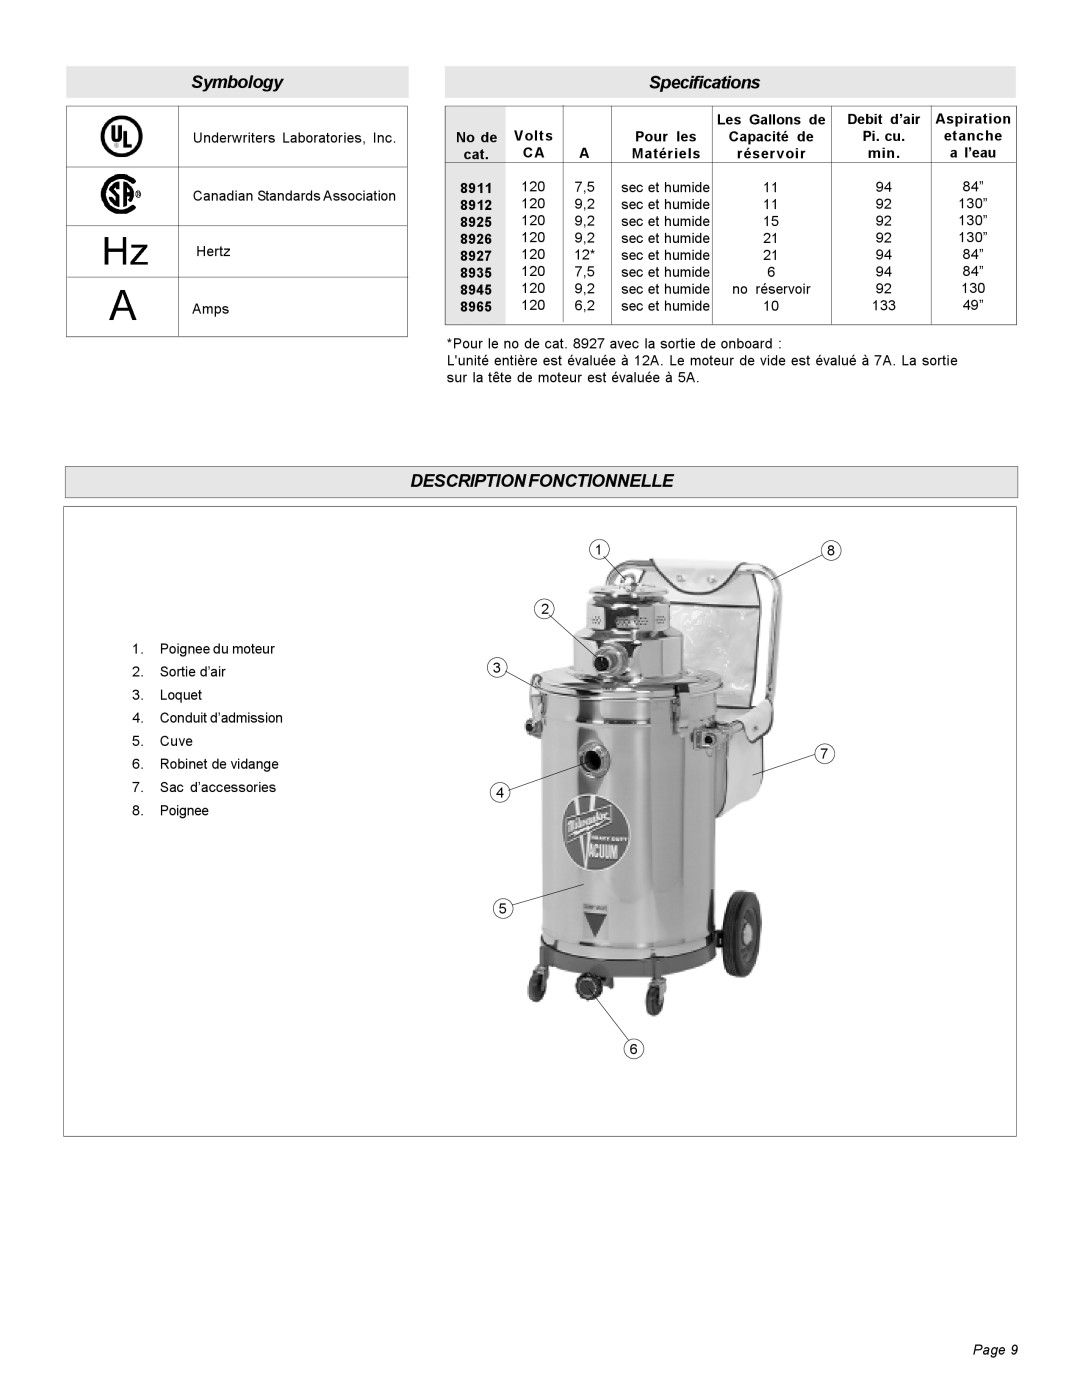 Milwaukee Heavy-Duty Commercial Vacuum manual Symbology, Specifications, Descriptionfonctionnelle, Page 